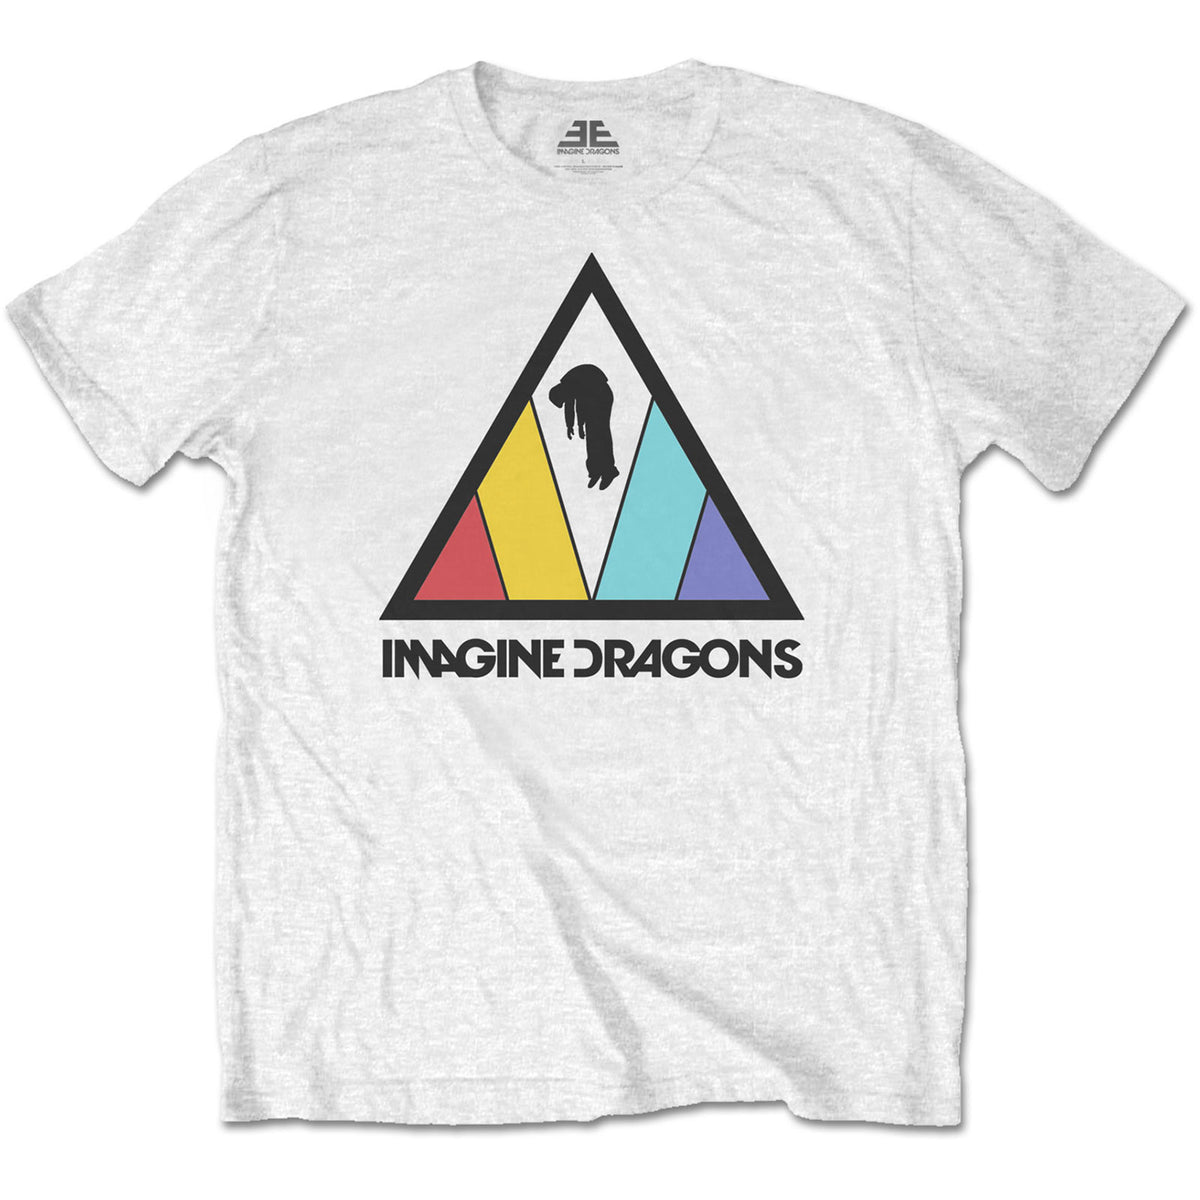 Imagine Dragons T-Shirt - Triangle Logo - Unisex Official Licensed Design